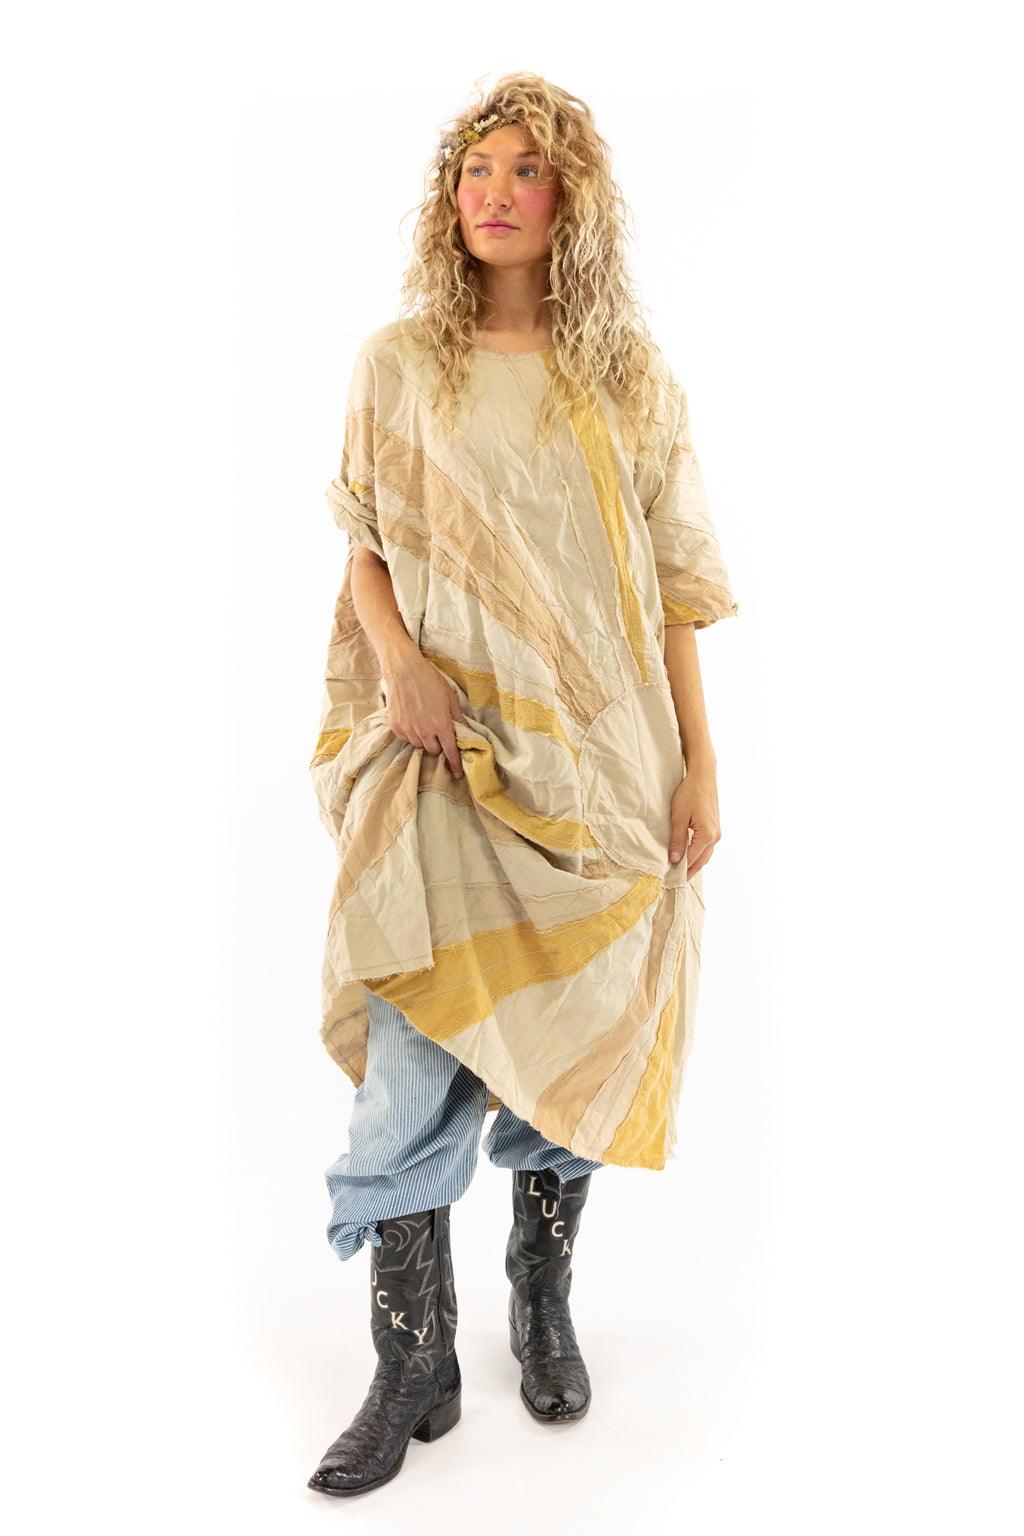 Follow The Sun Artist Smock Dress - Magnolia Pearl Clothing